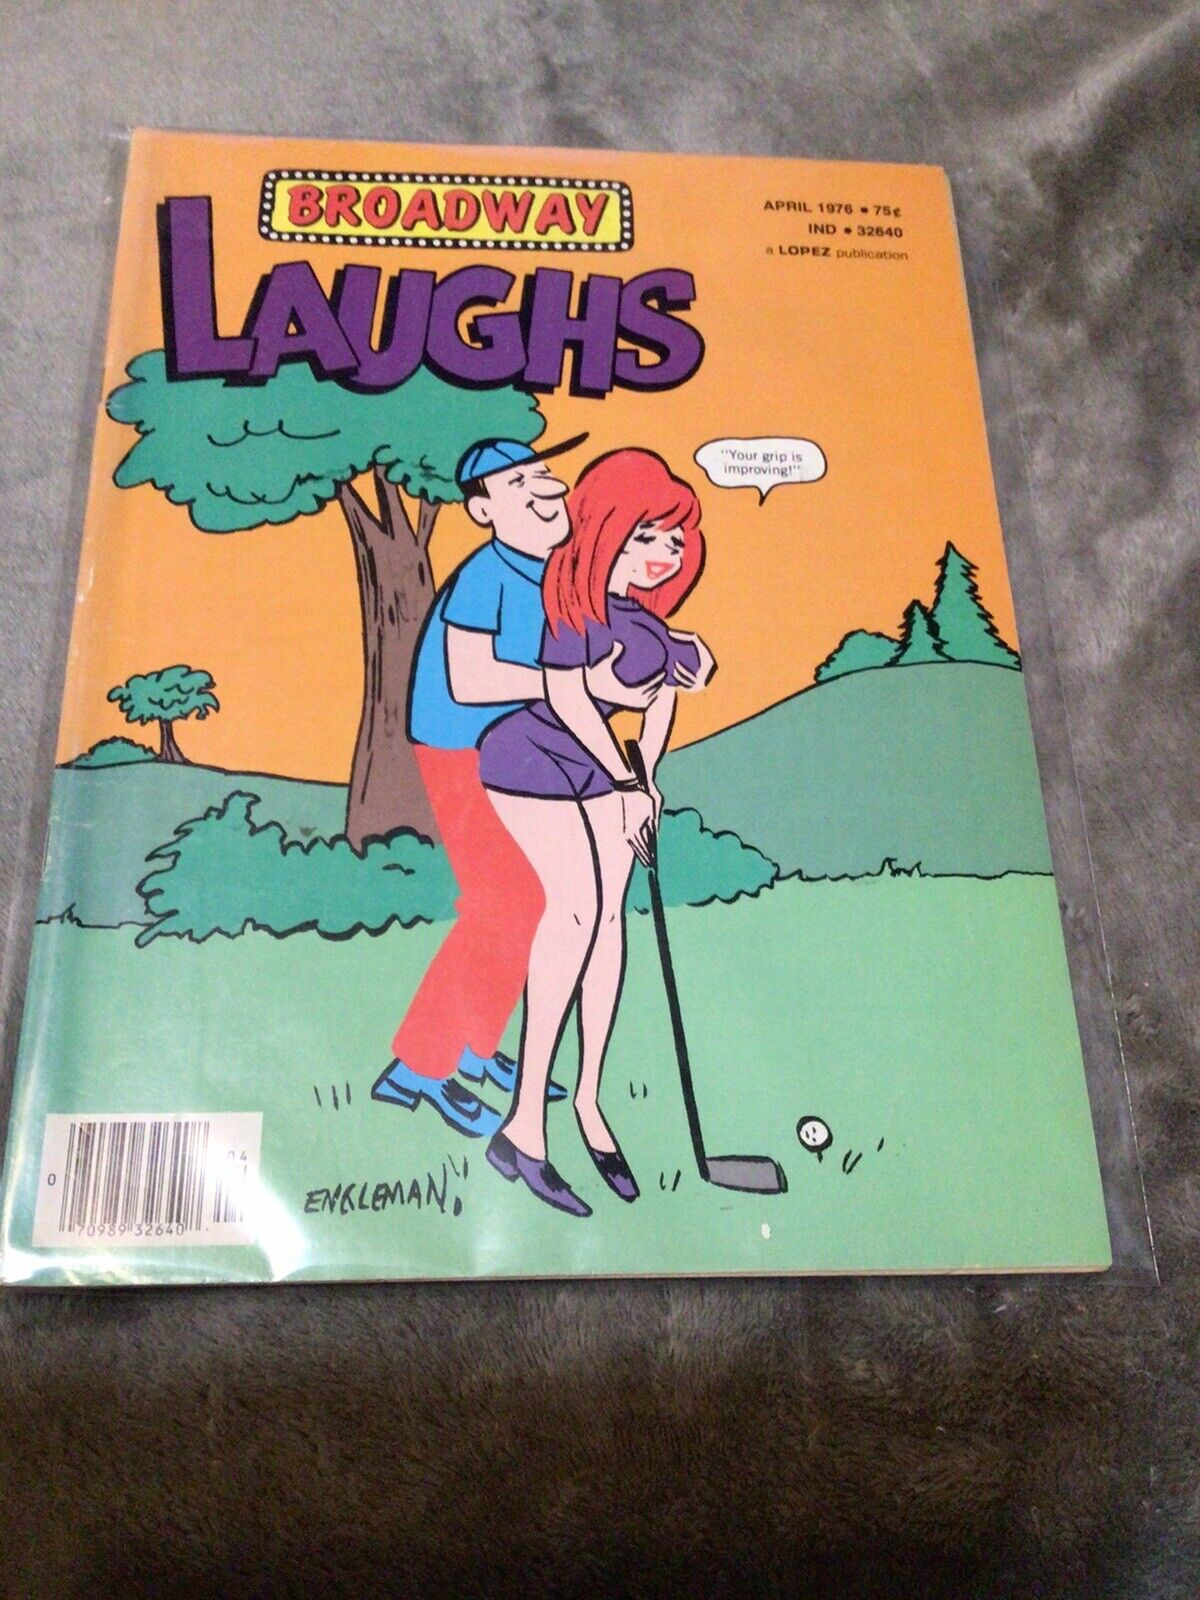 Vintage Broadway Laughs Sex Toons And Jokes Adult Humor Comic Book April 1976